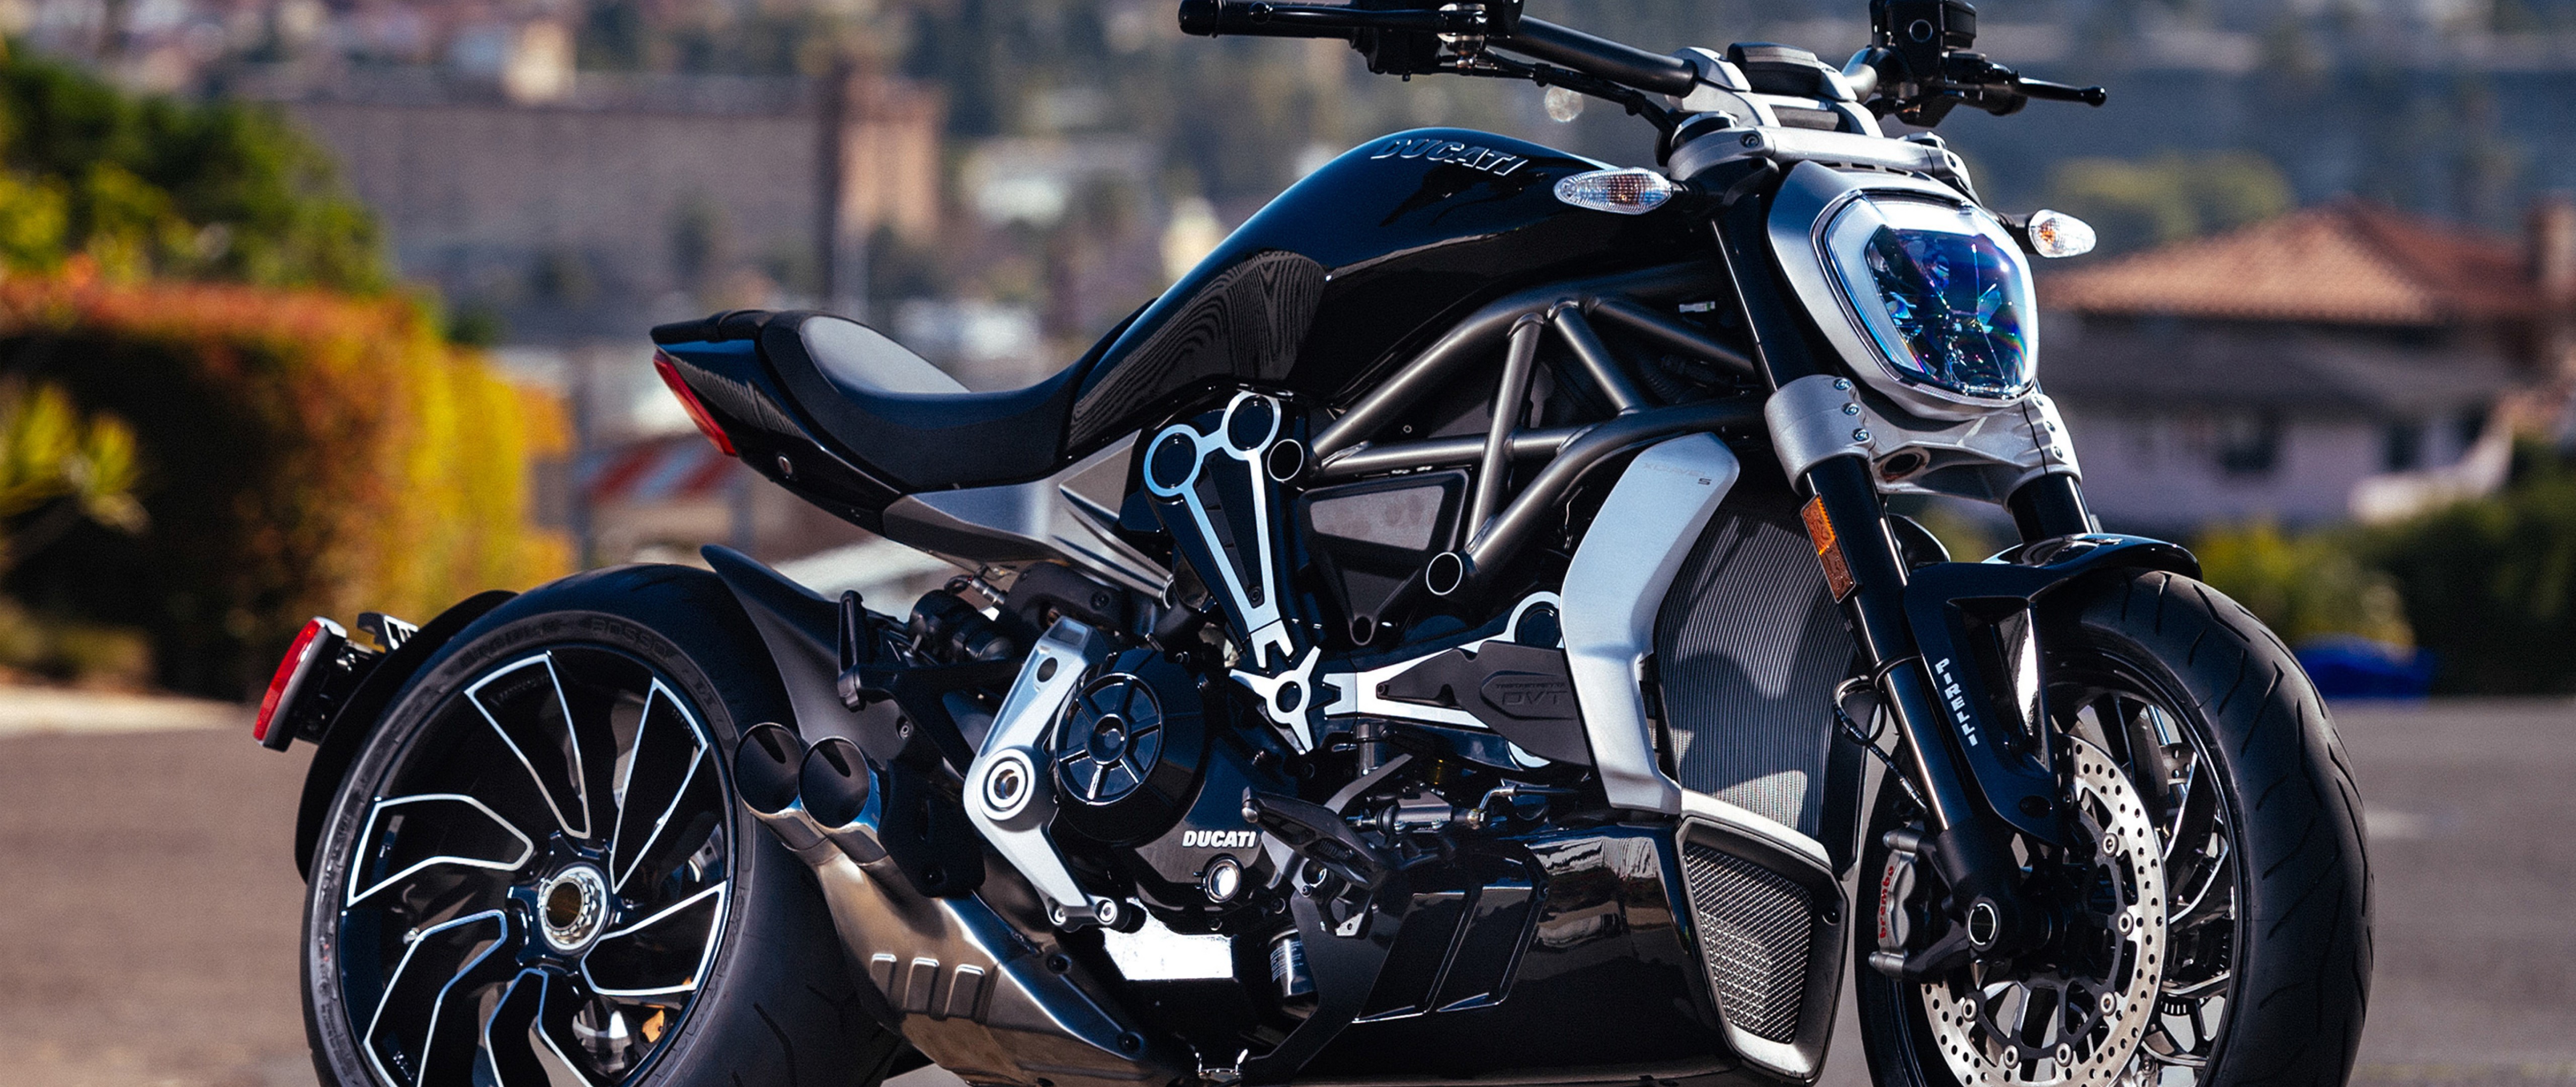 Ducati Diavel Bike Hd Wallpaper for Desktop and Mobiles 4K Ultra HD Wide TV  - HD Wallpaper 